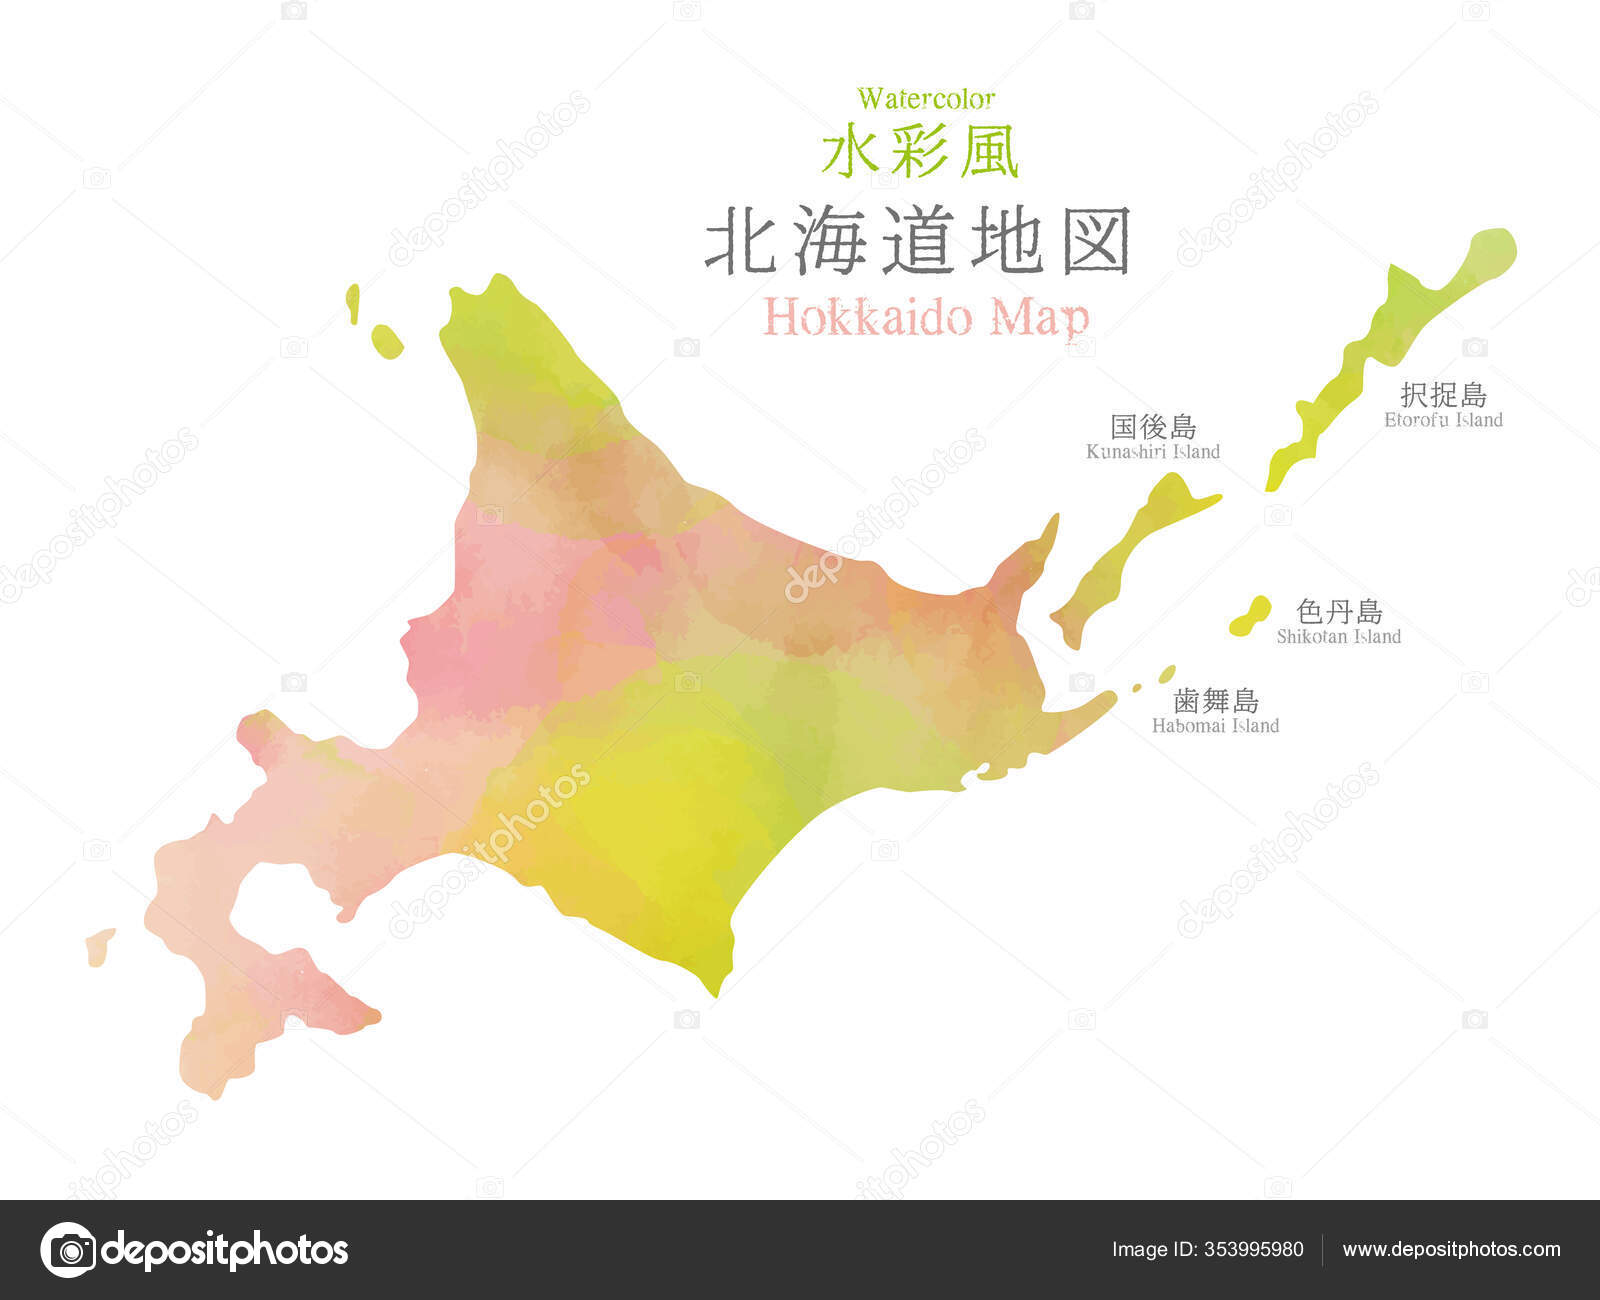 Japan Hokkaido Region Map Watercolor Texture Traslation Japanese Hokkaido Map Vector Image By C Michikodesign Vector Stock 353995980